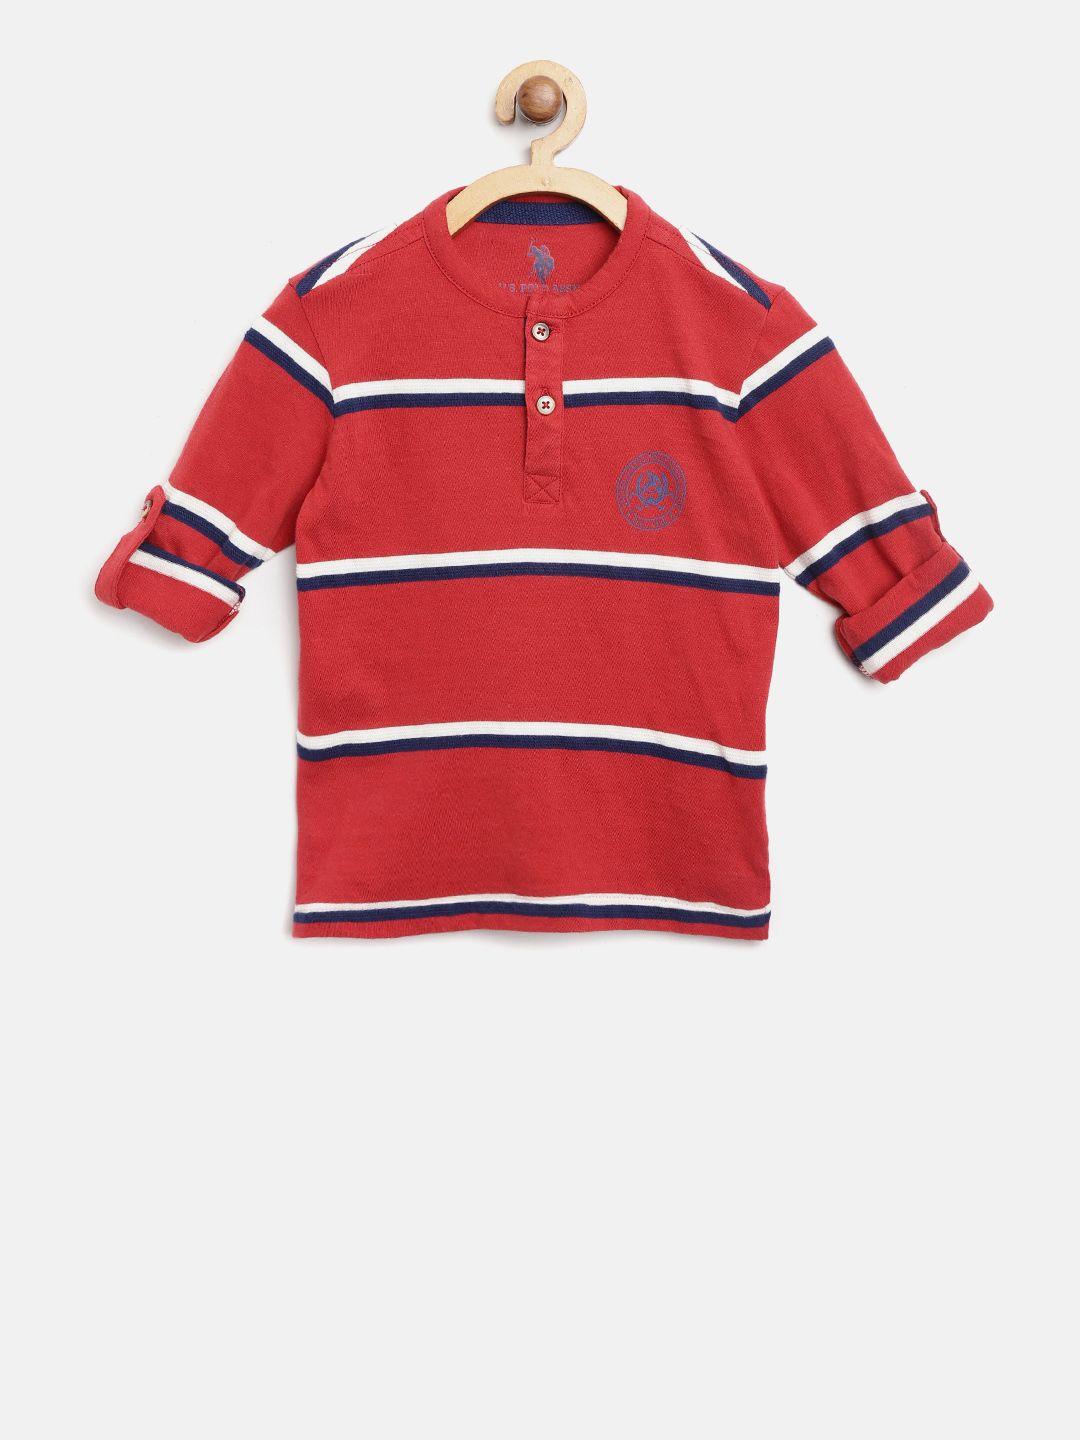 u.s. polo assn. kids boys red & white striped henley neck t-shirt